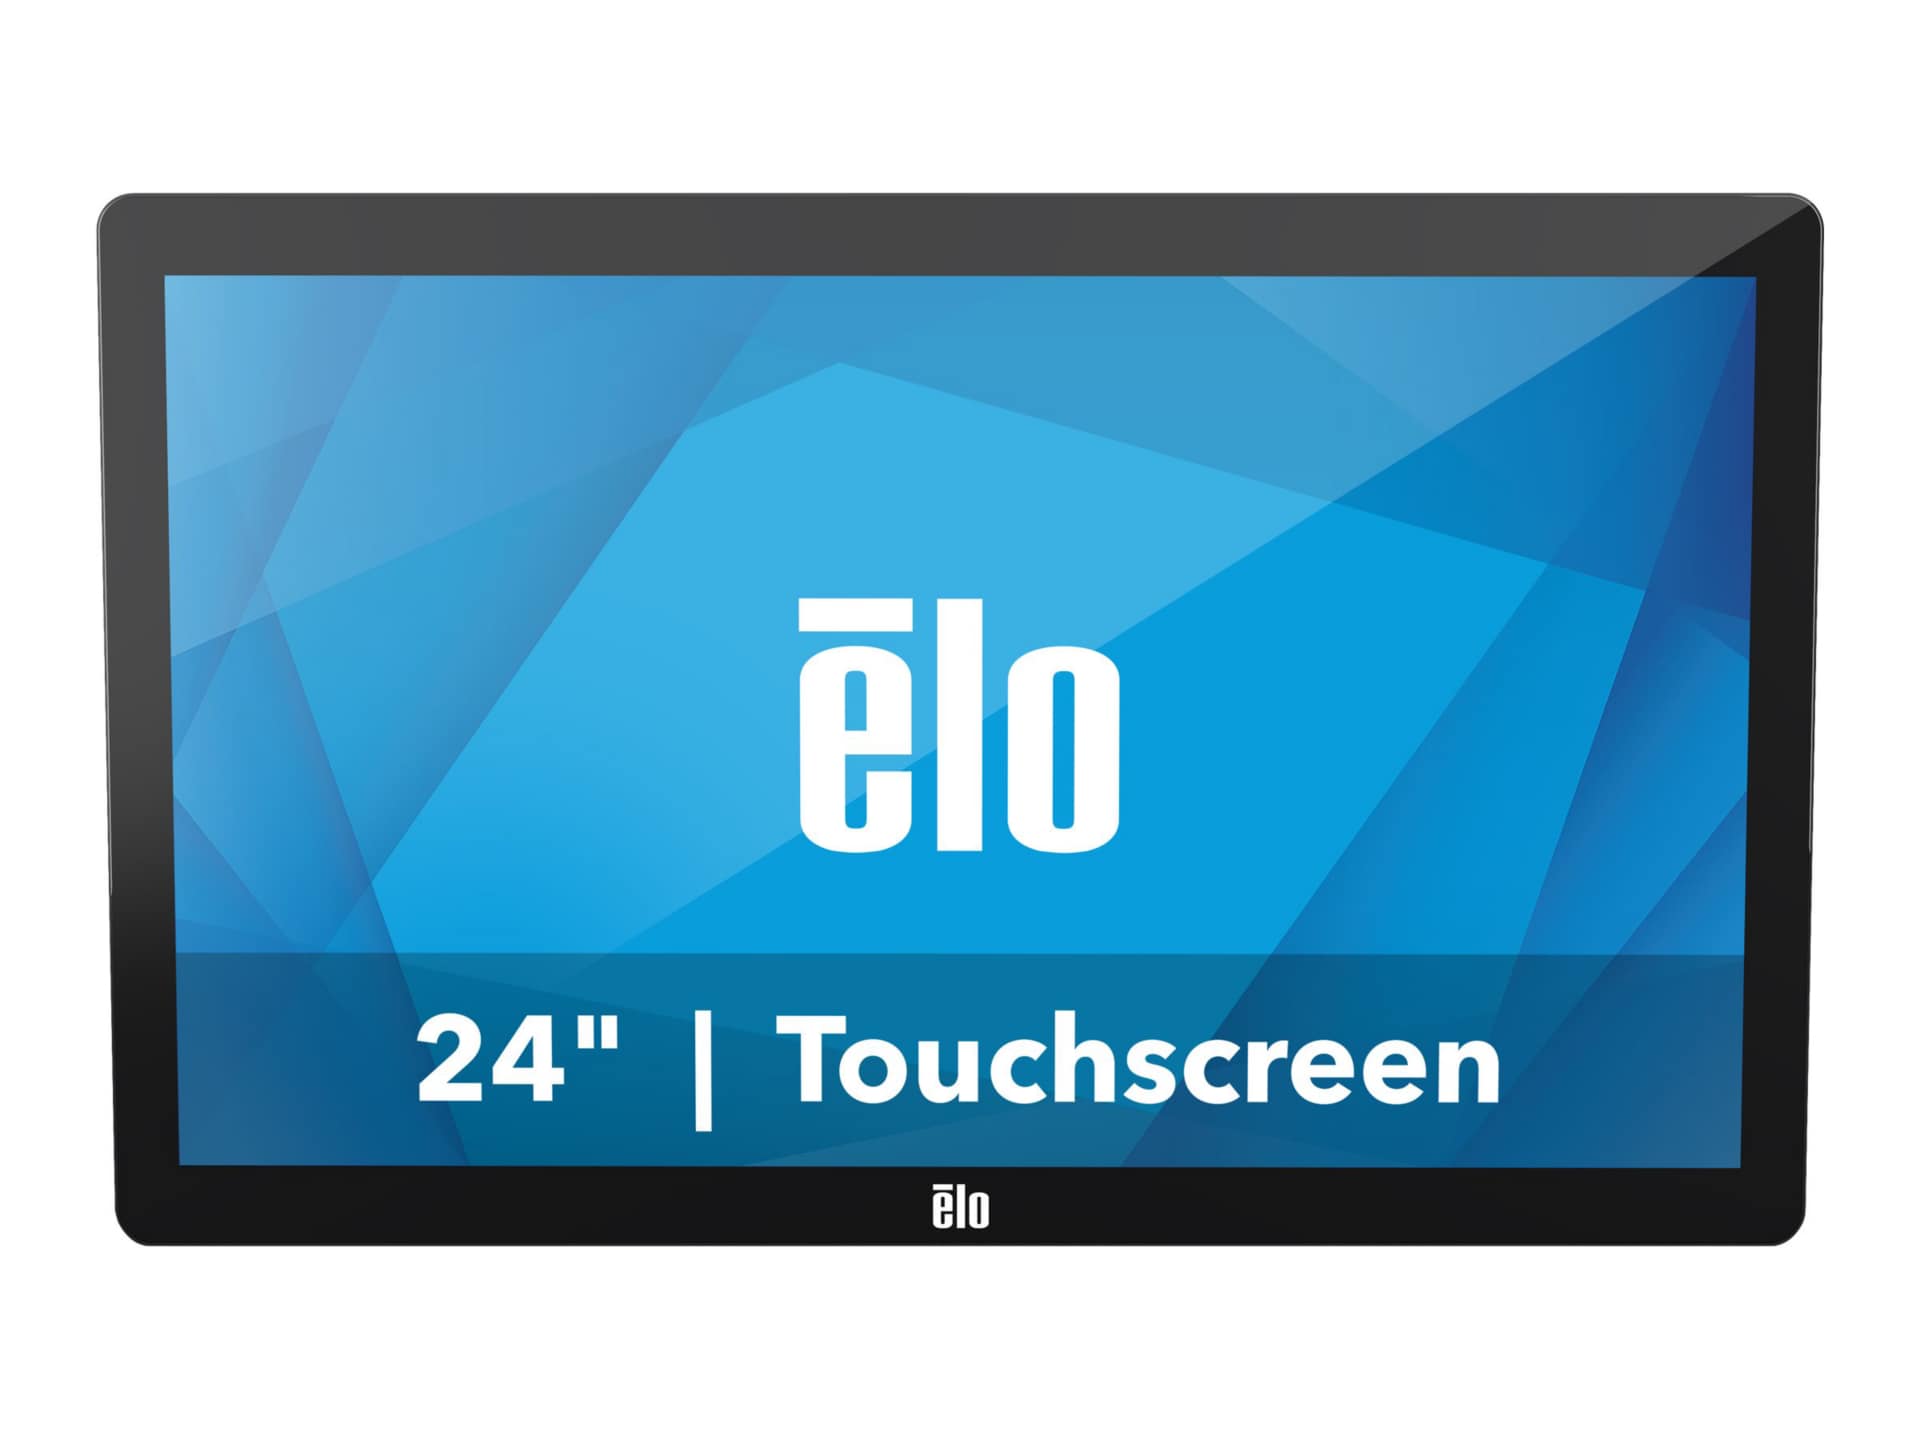 Elo 2402L - 24" Touchscreen Monitor